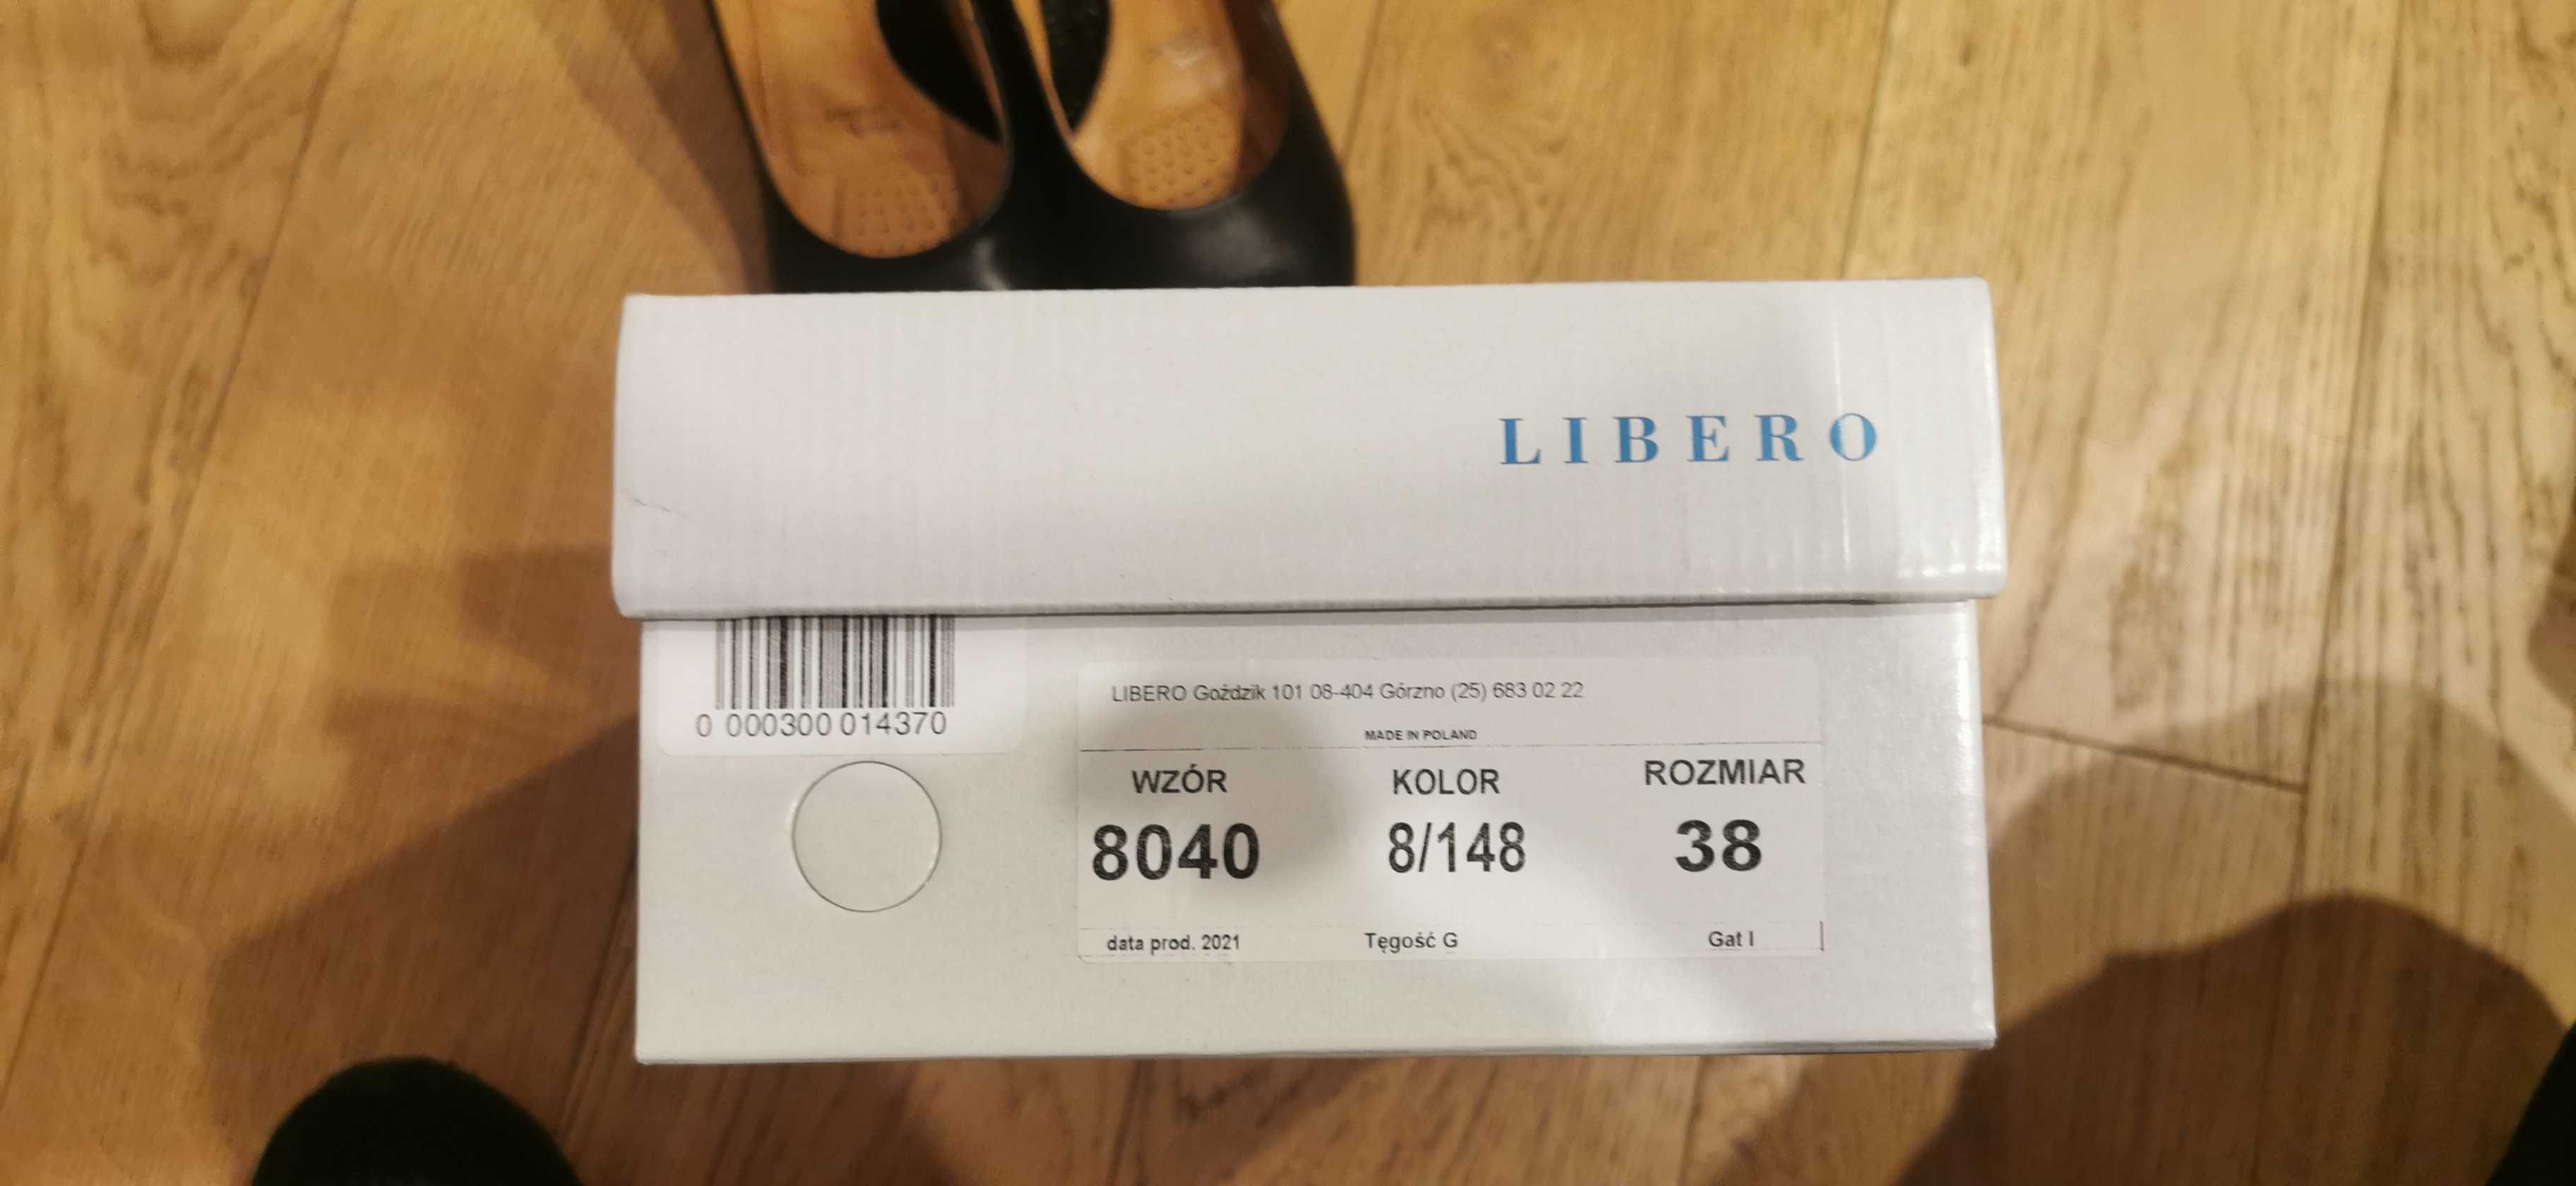 Półbuty Libero model 8040 czarne skorzane roxmiar 38